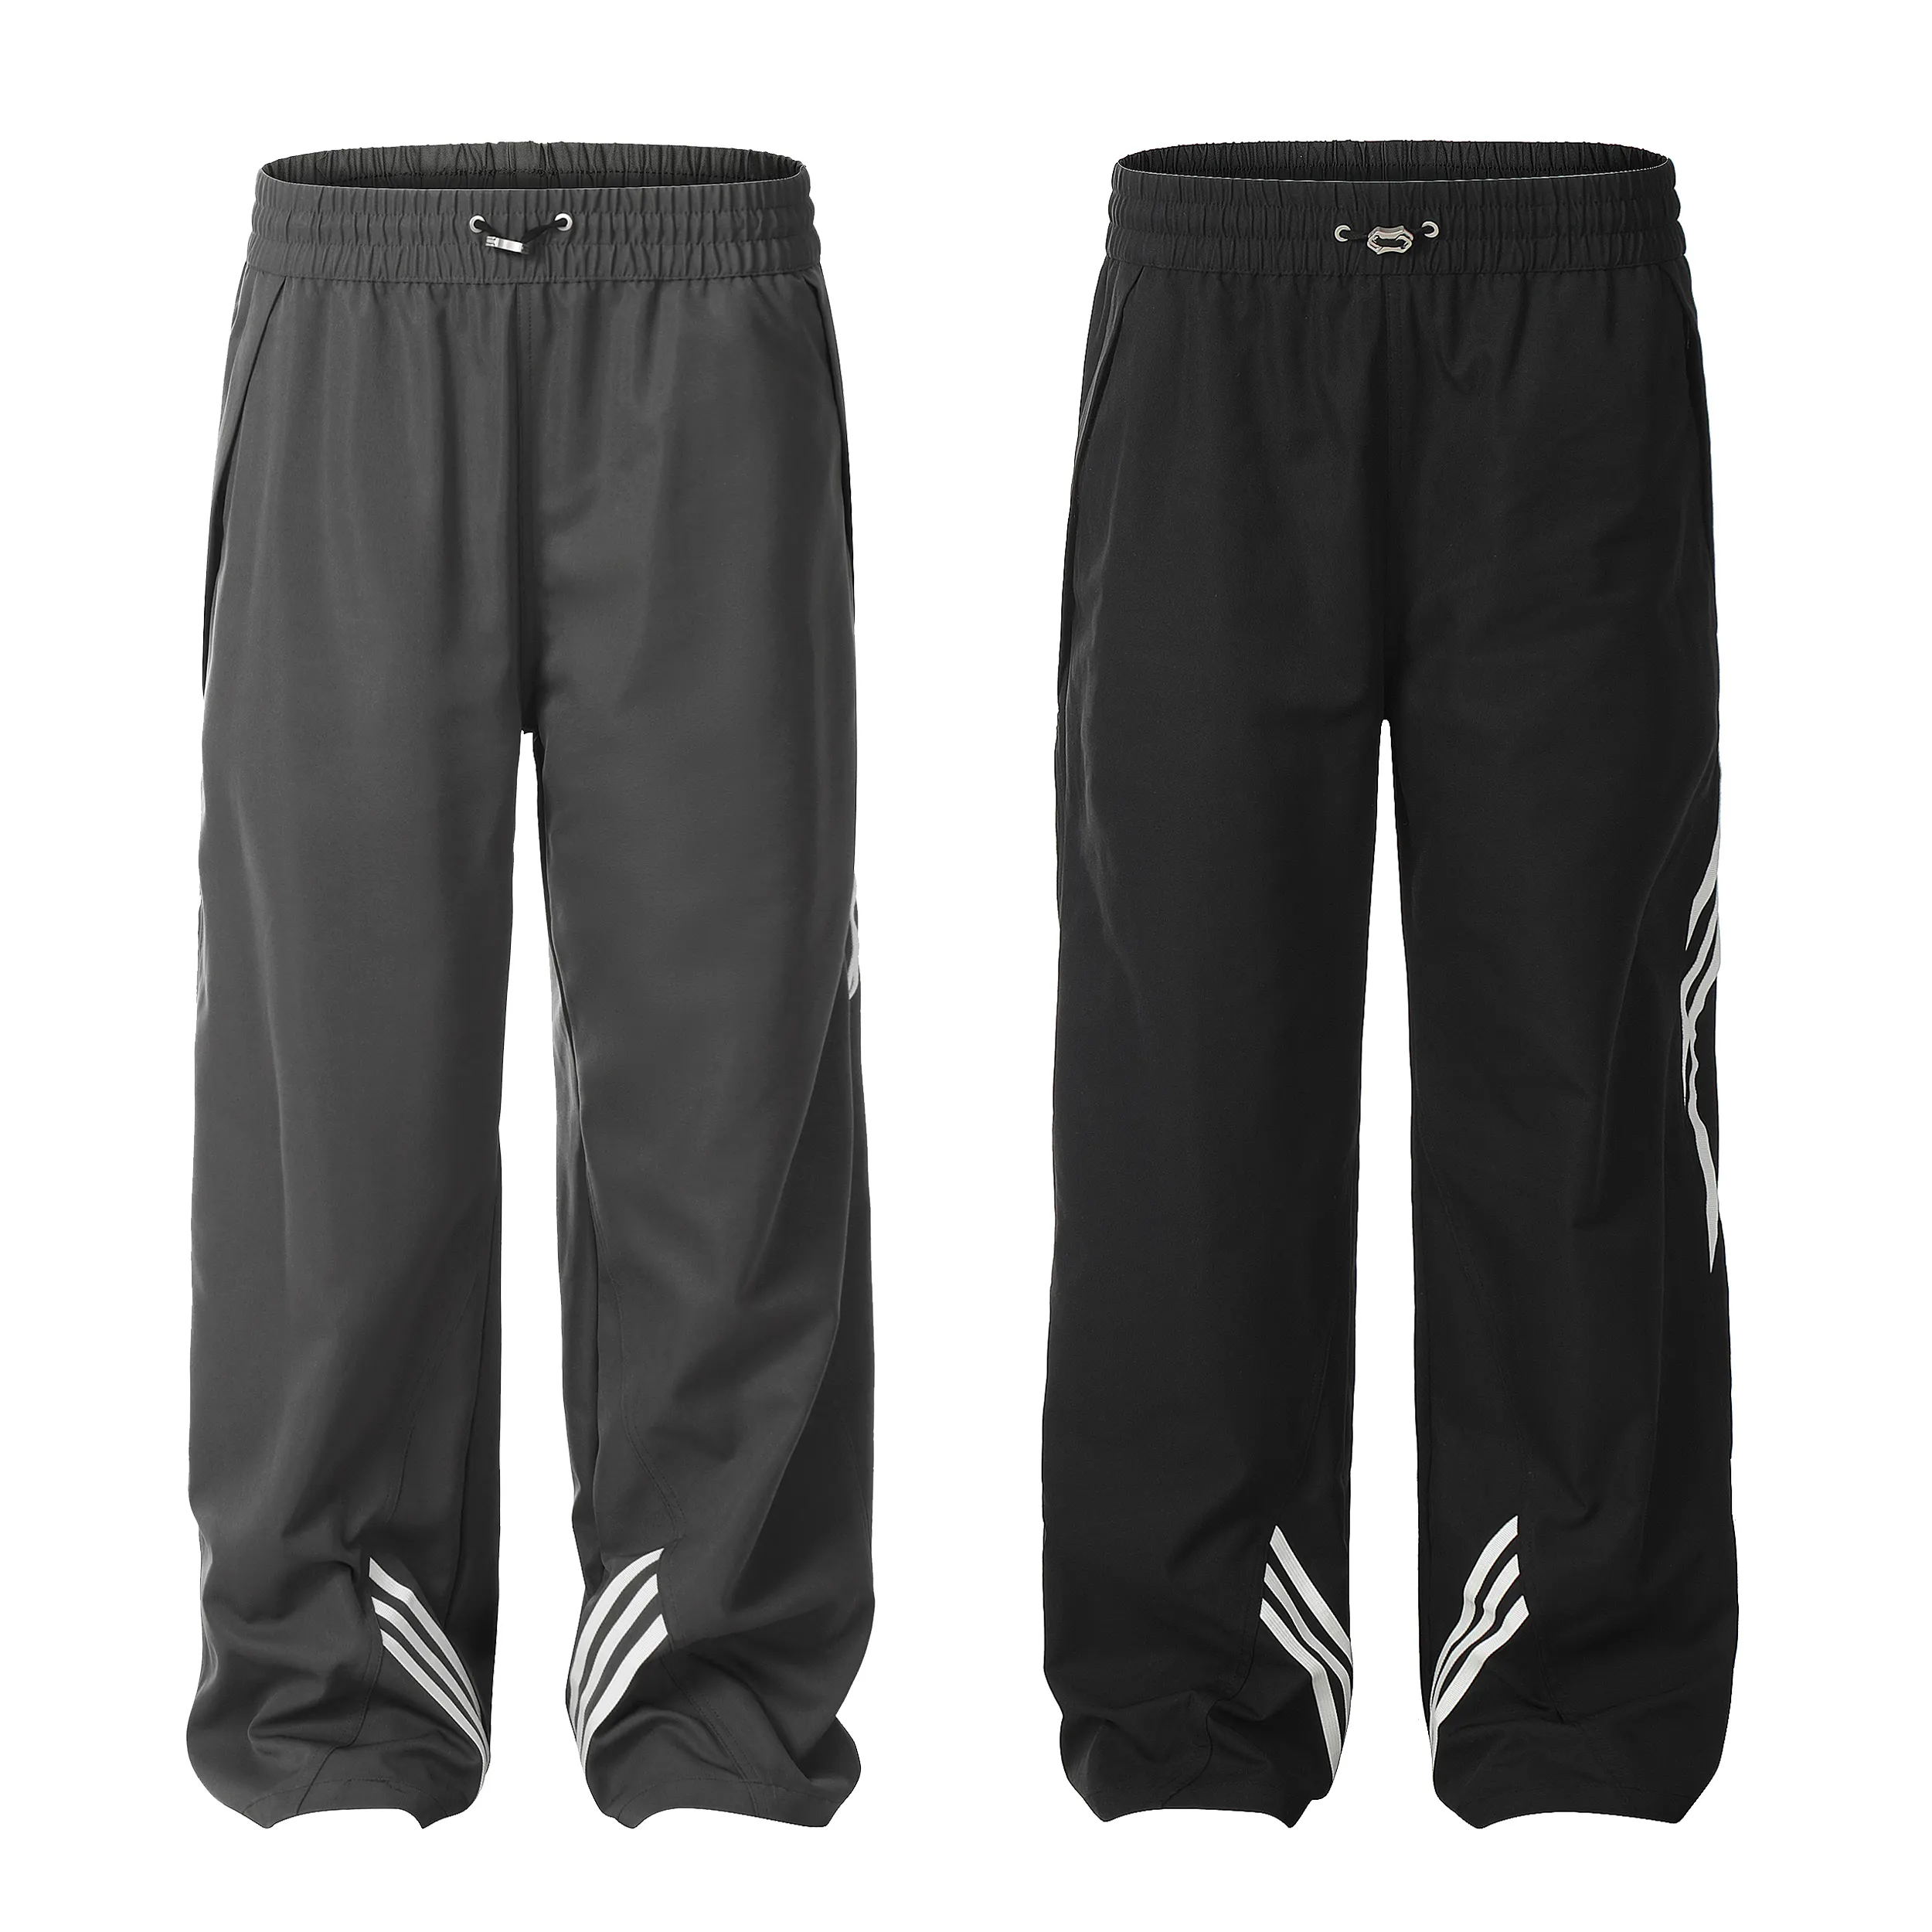 Fabrika doğrudan satış Sweatpants çizgili özel erkek naylon kargo Jogger taktik pantolon rüzgarlık parça kargo pantolon